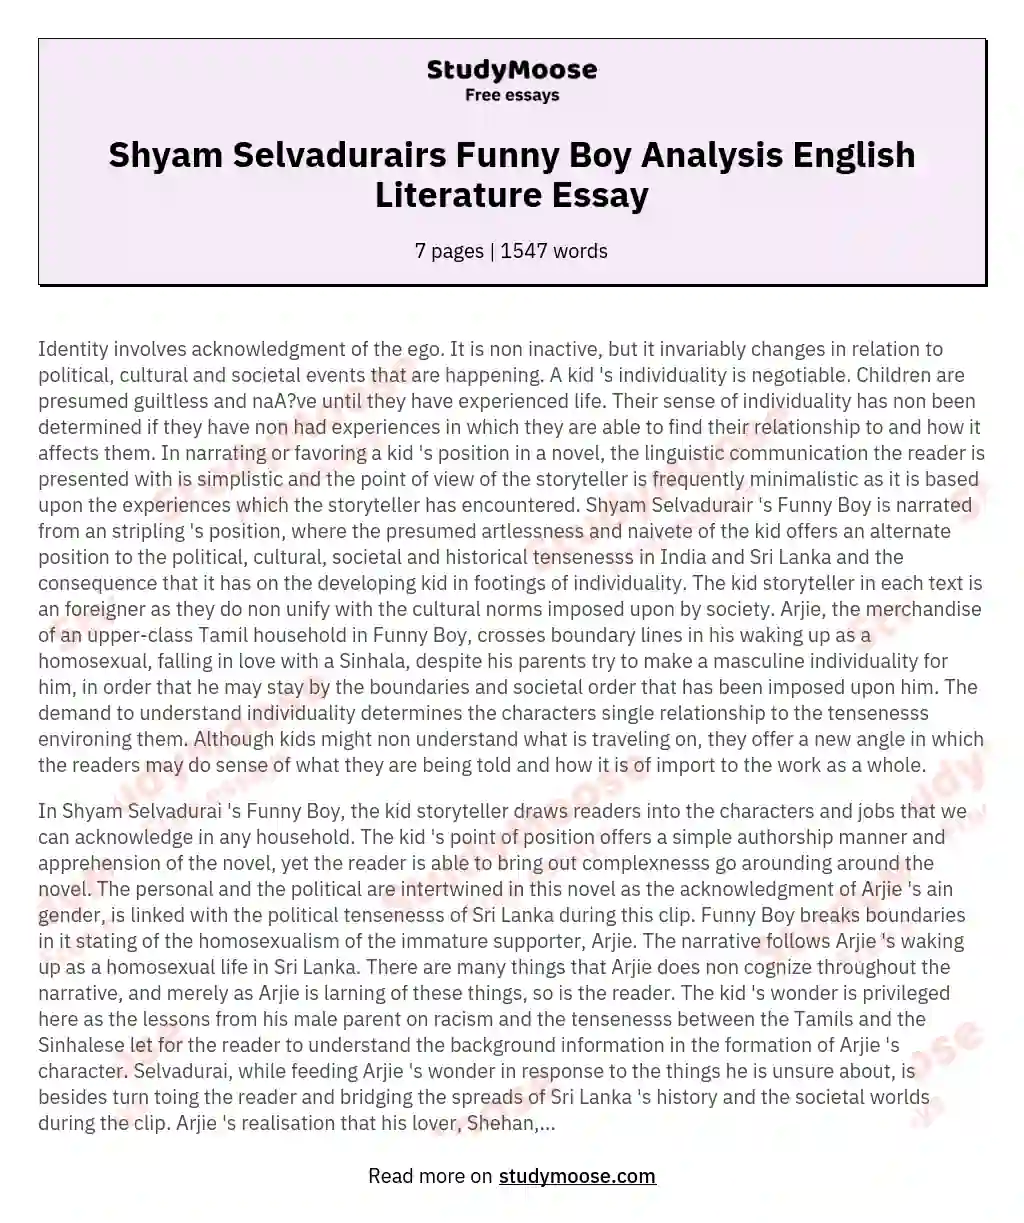 Shyam Selvadurairs Funny Boy Analysis English Literature Essay essay